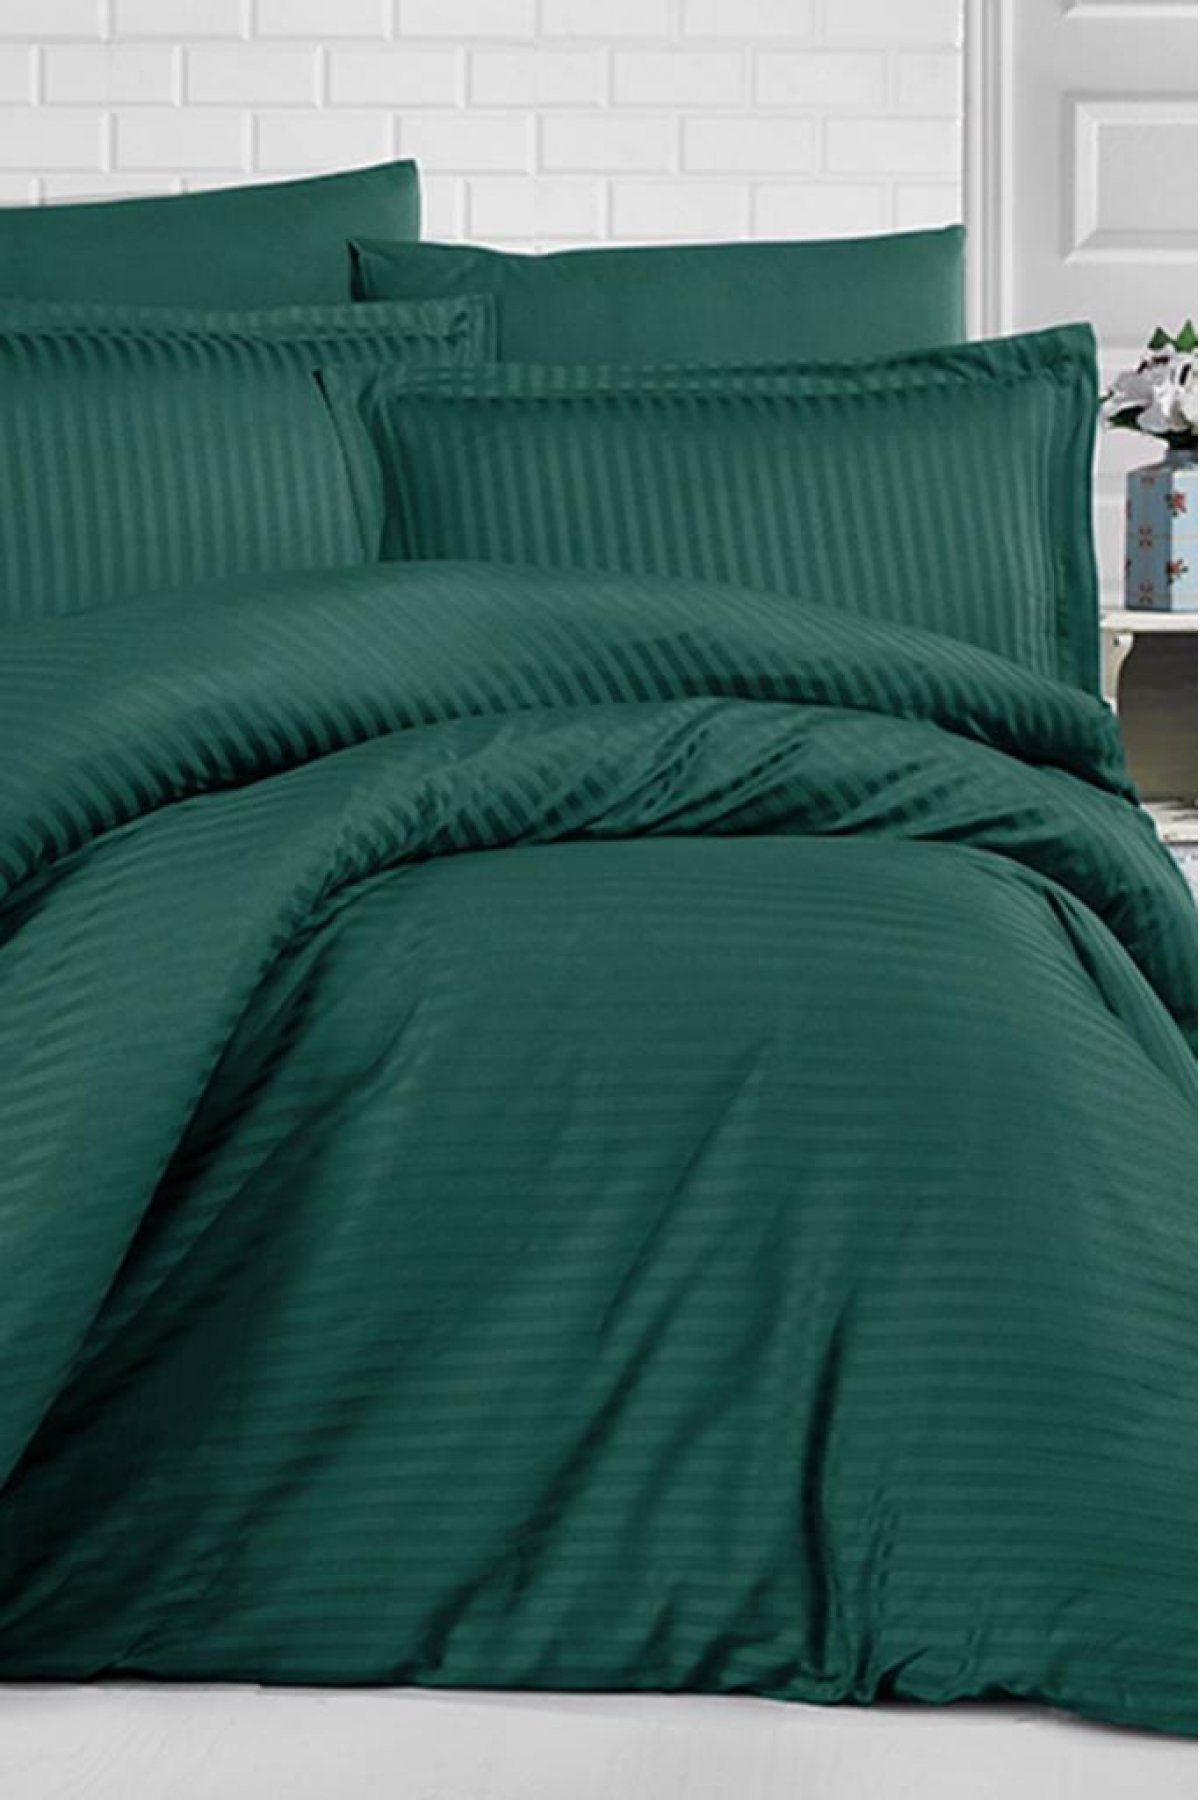 Bedding-Green